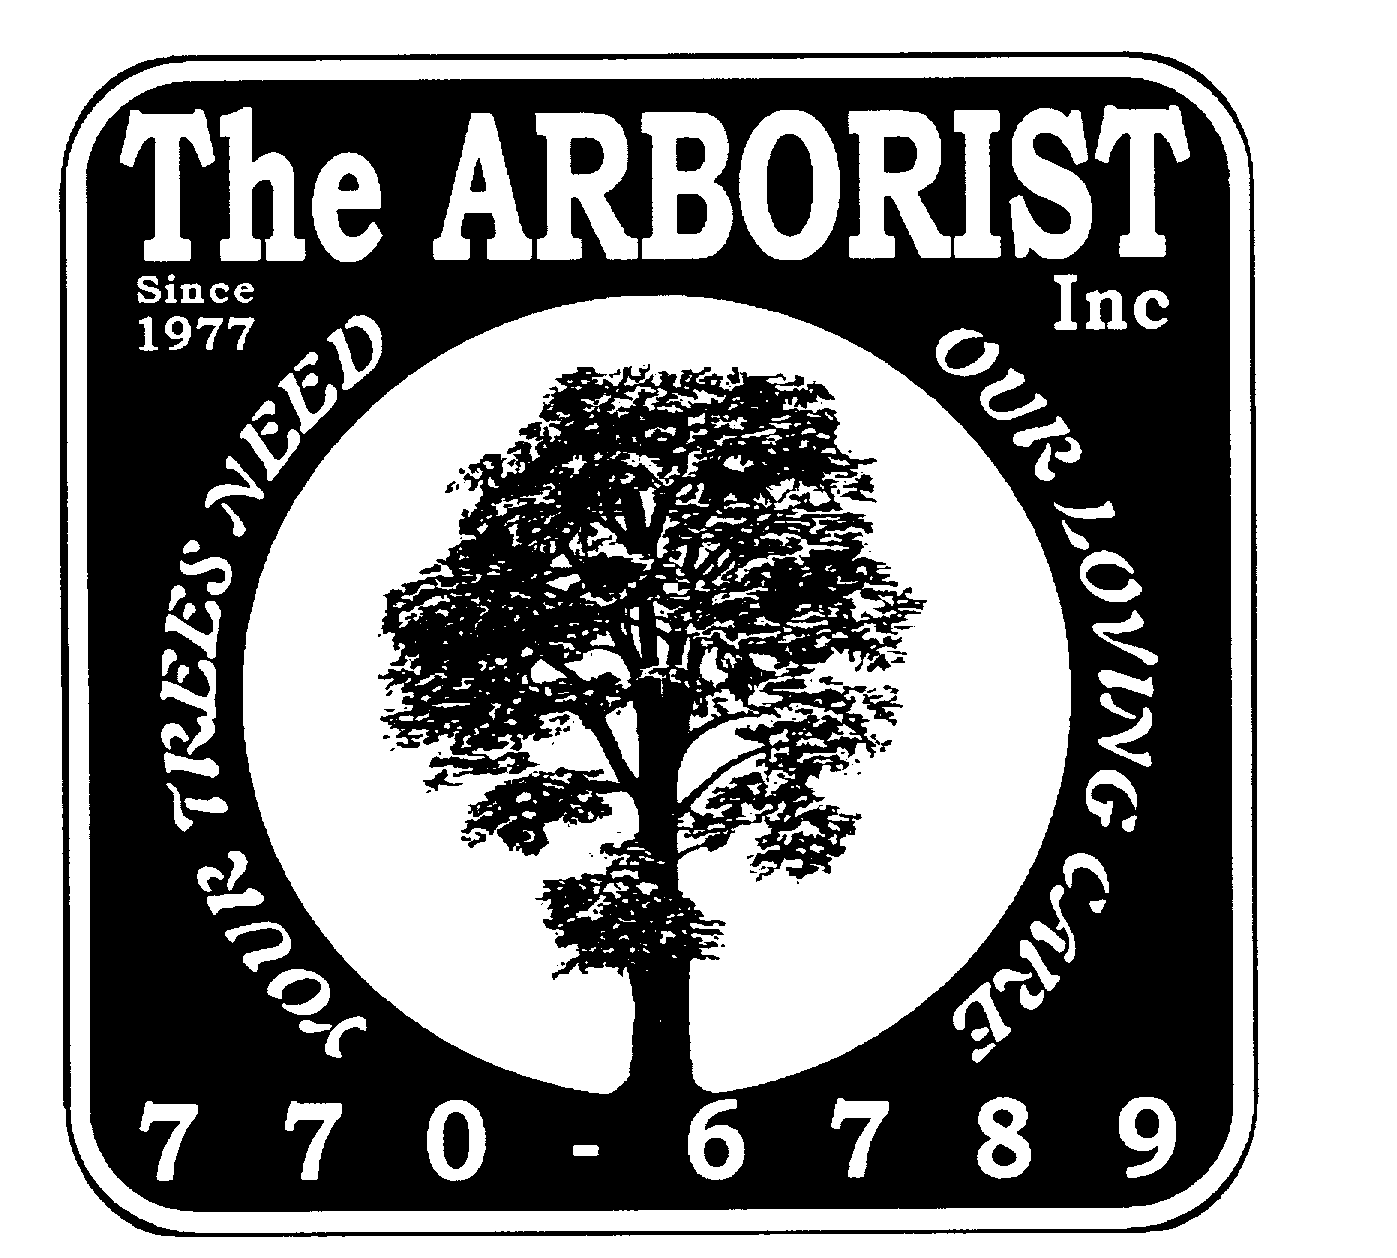 Trademark Logo THE ARBORIST